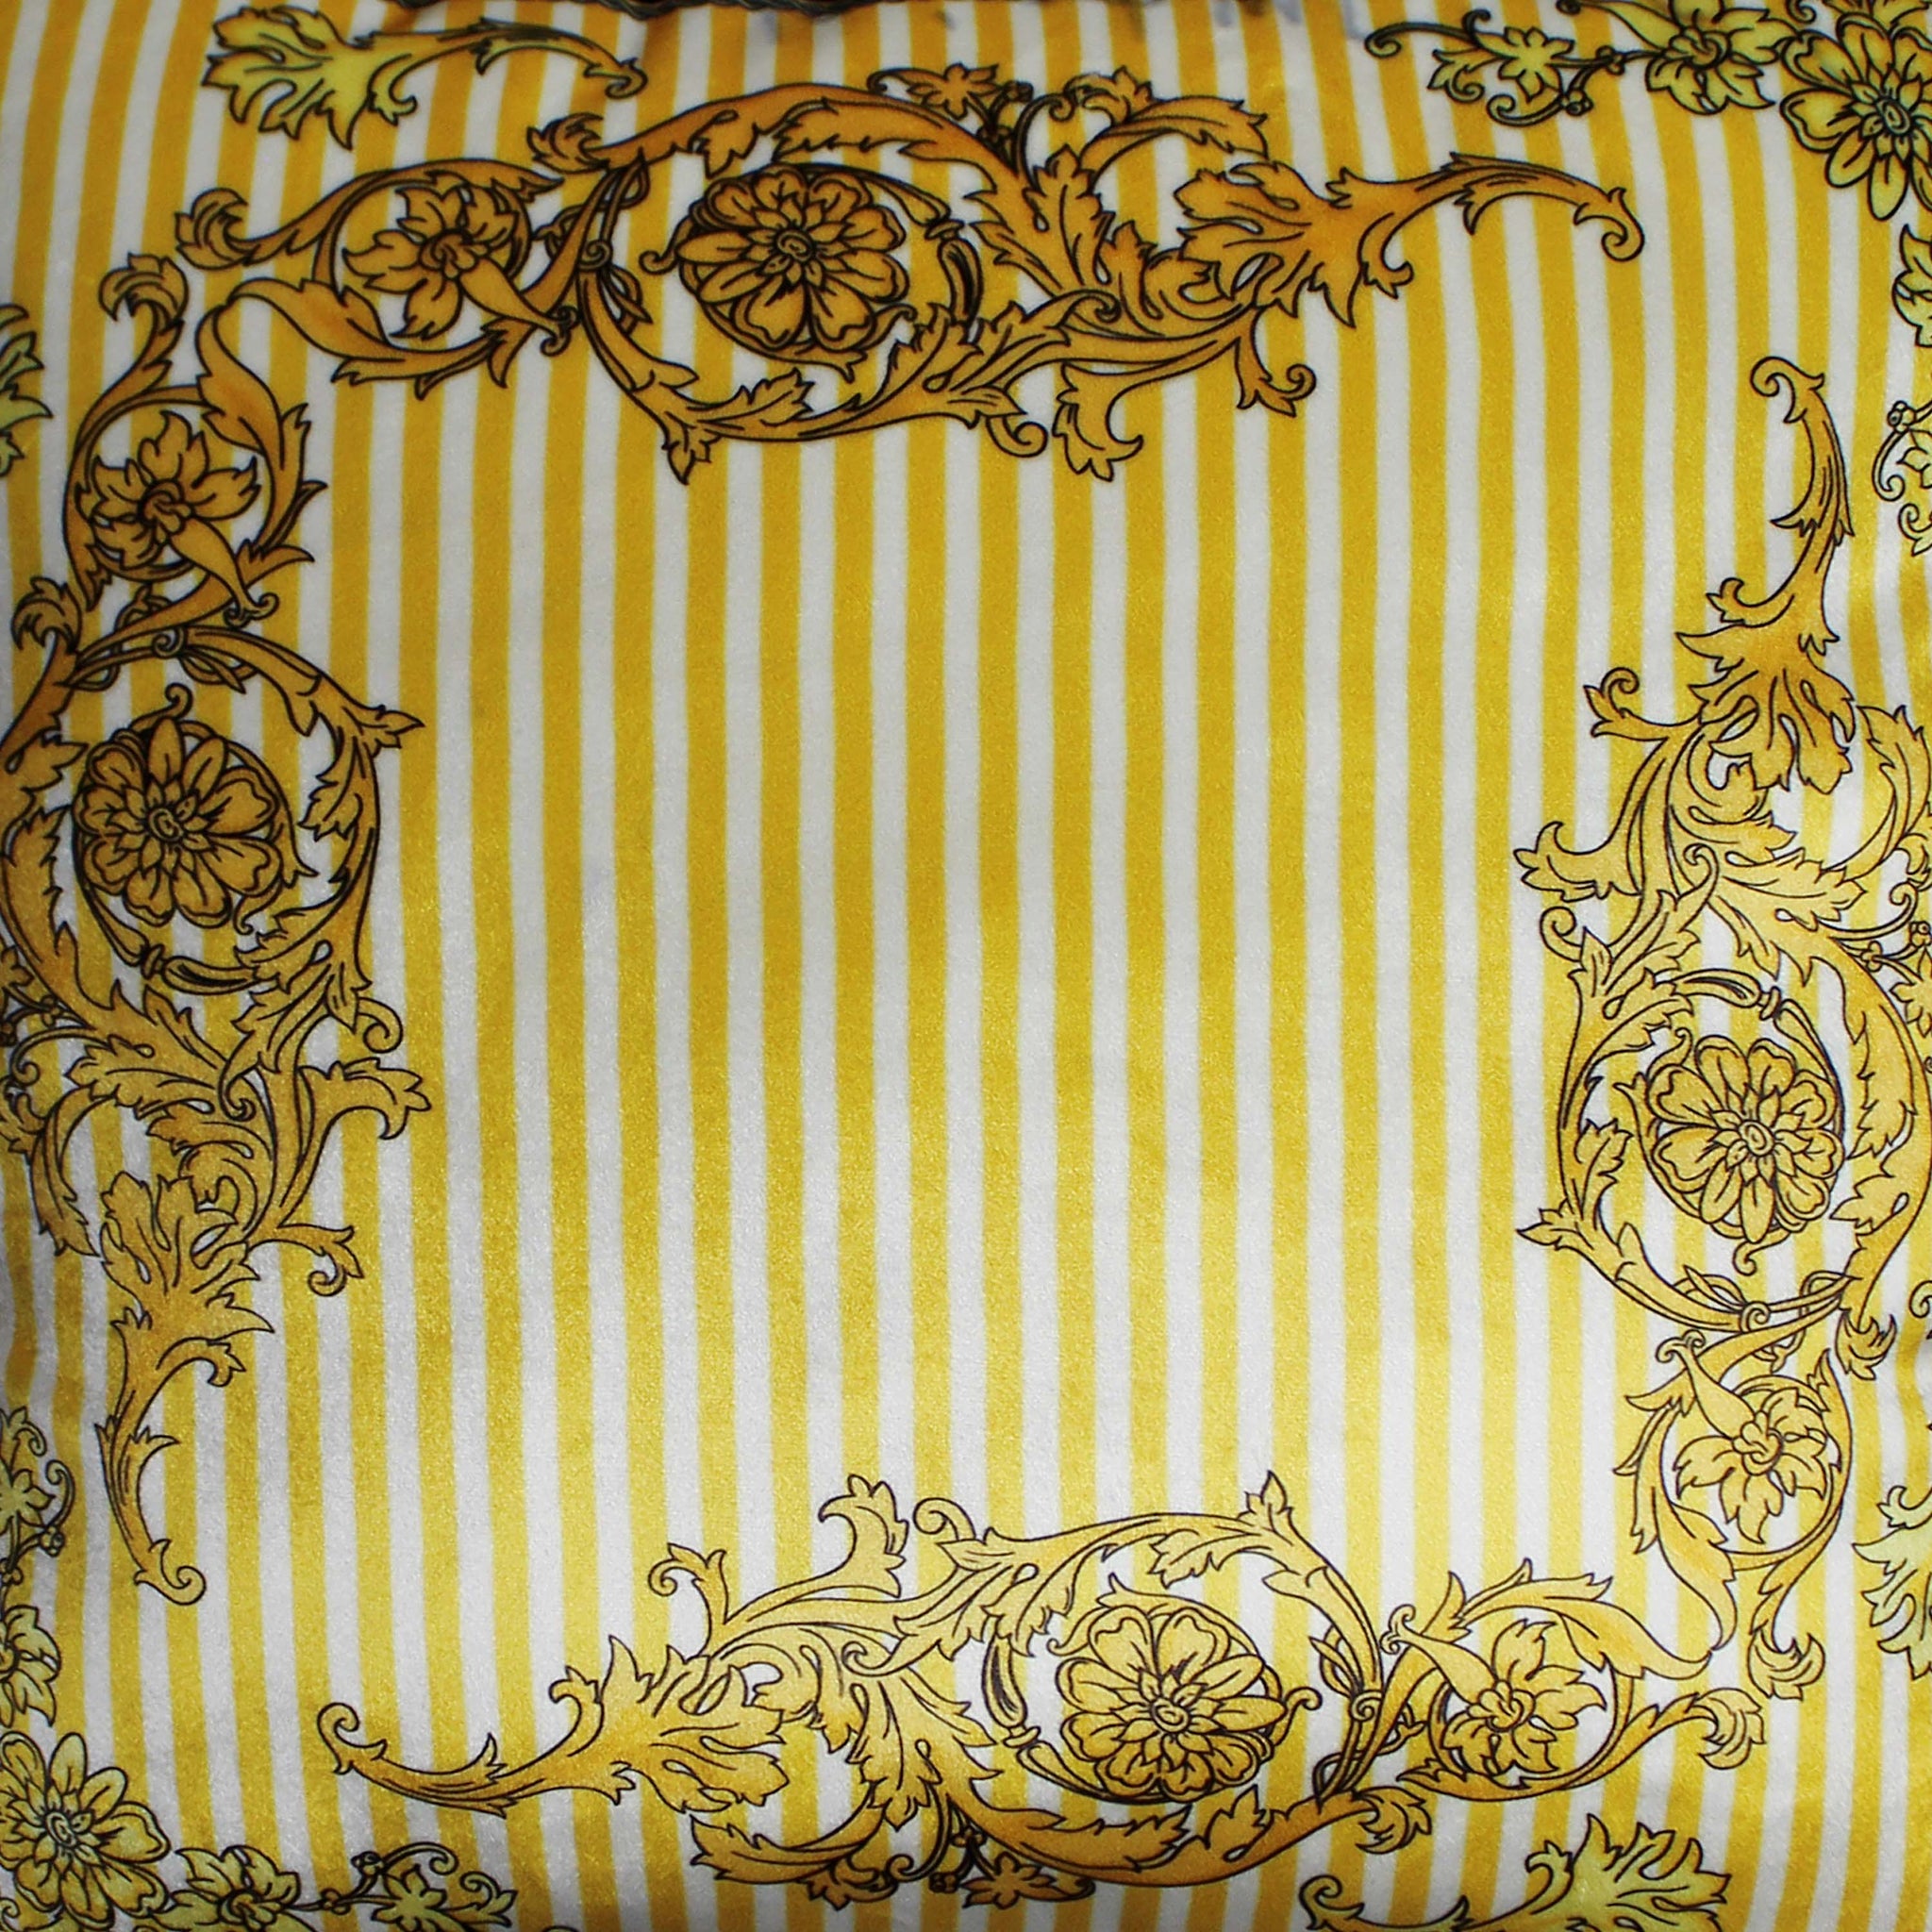 Gold Velvet Cushion Cover Baroque Floral Decorative Pillowcase Luxurious Home Decor Throw Pillow for Sofa Chair Living Room 45x45 cm 18x18 In